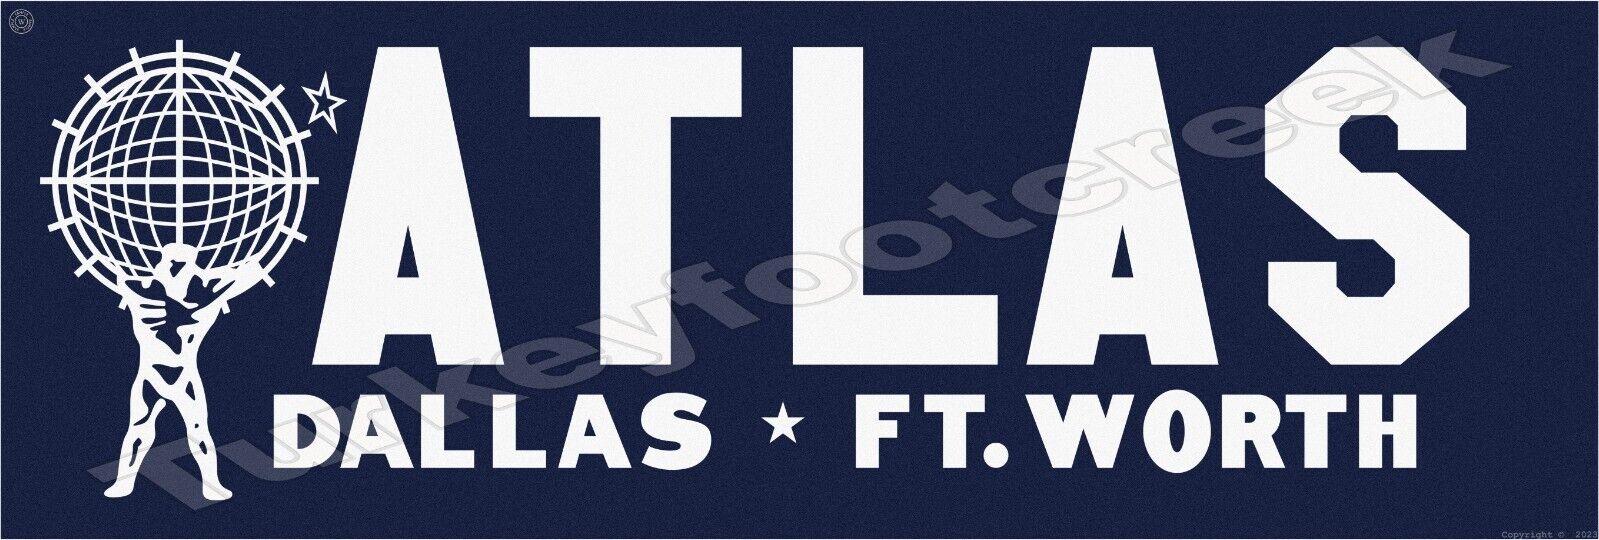 Atlas Dallas * Ft. Worth 8\